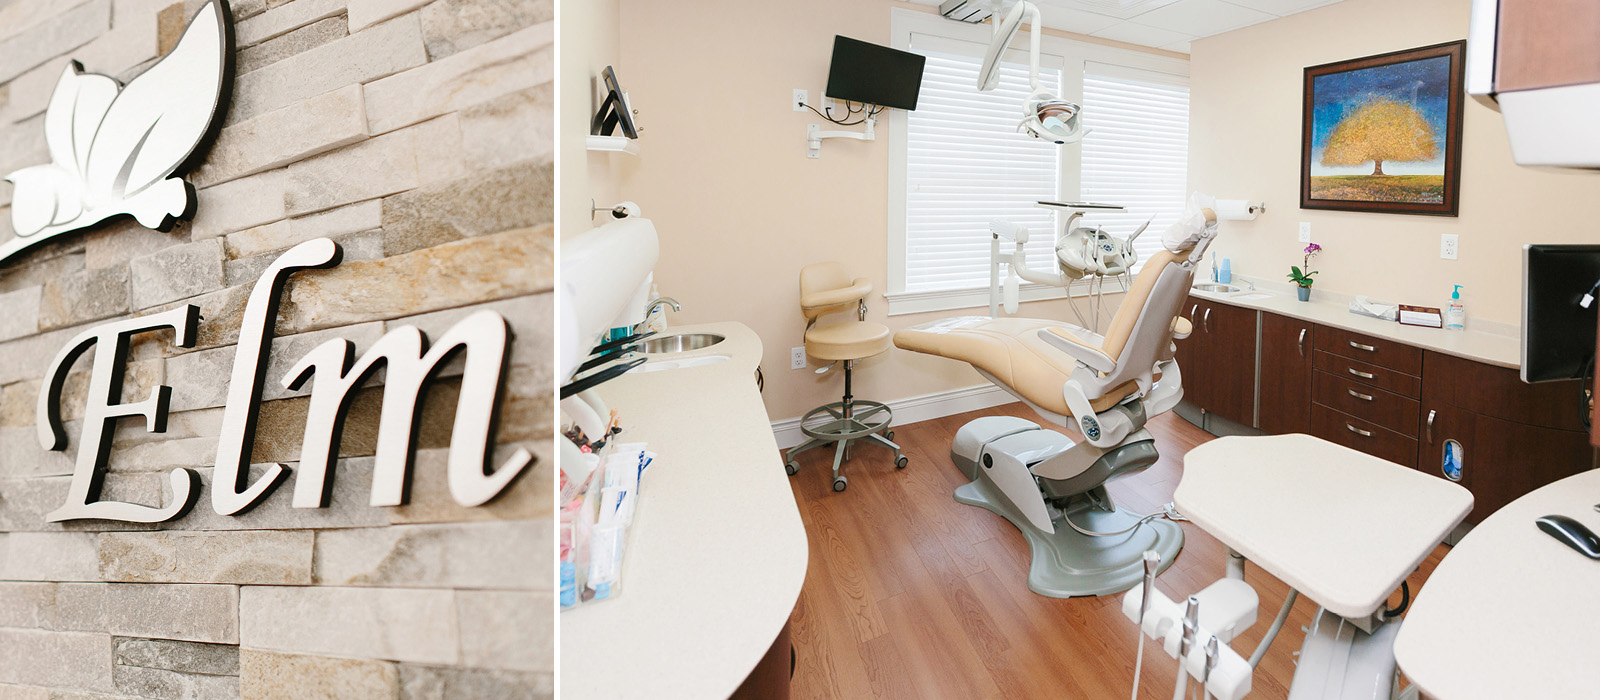 1010 Dental treatment room